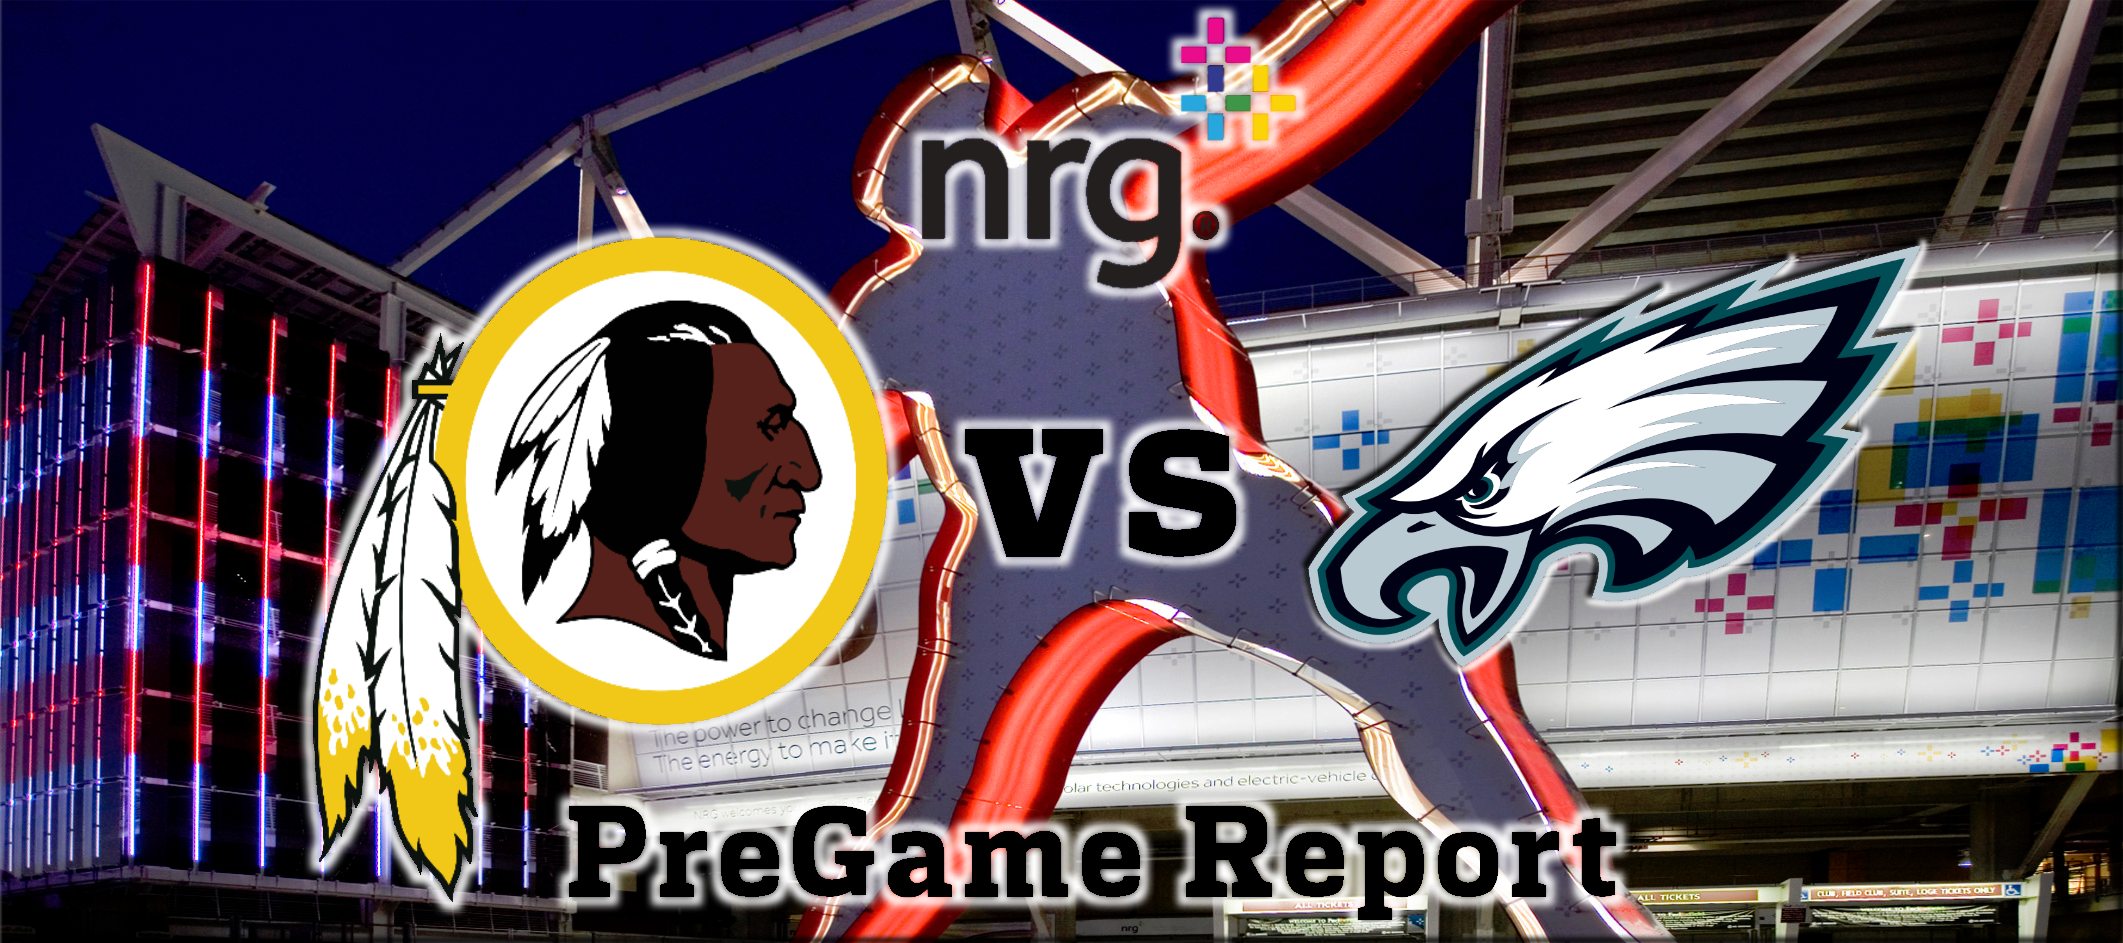 NRG Energy Pre-Game Report - Redskins vs Eagles Week 6